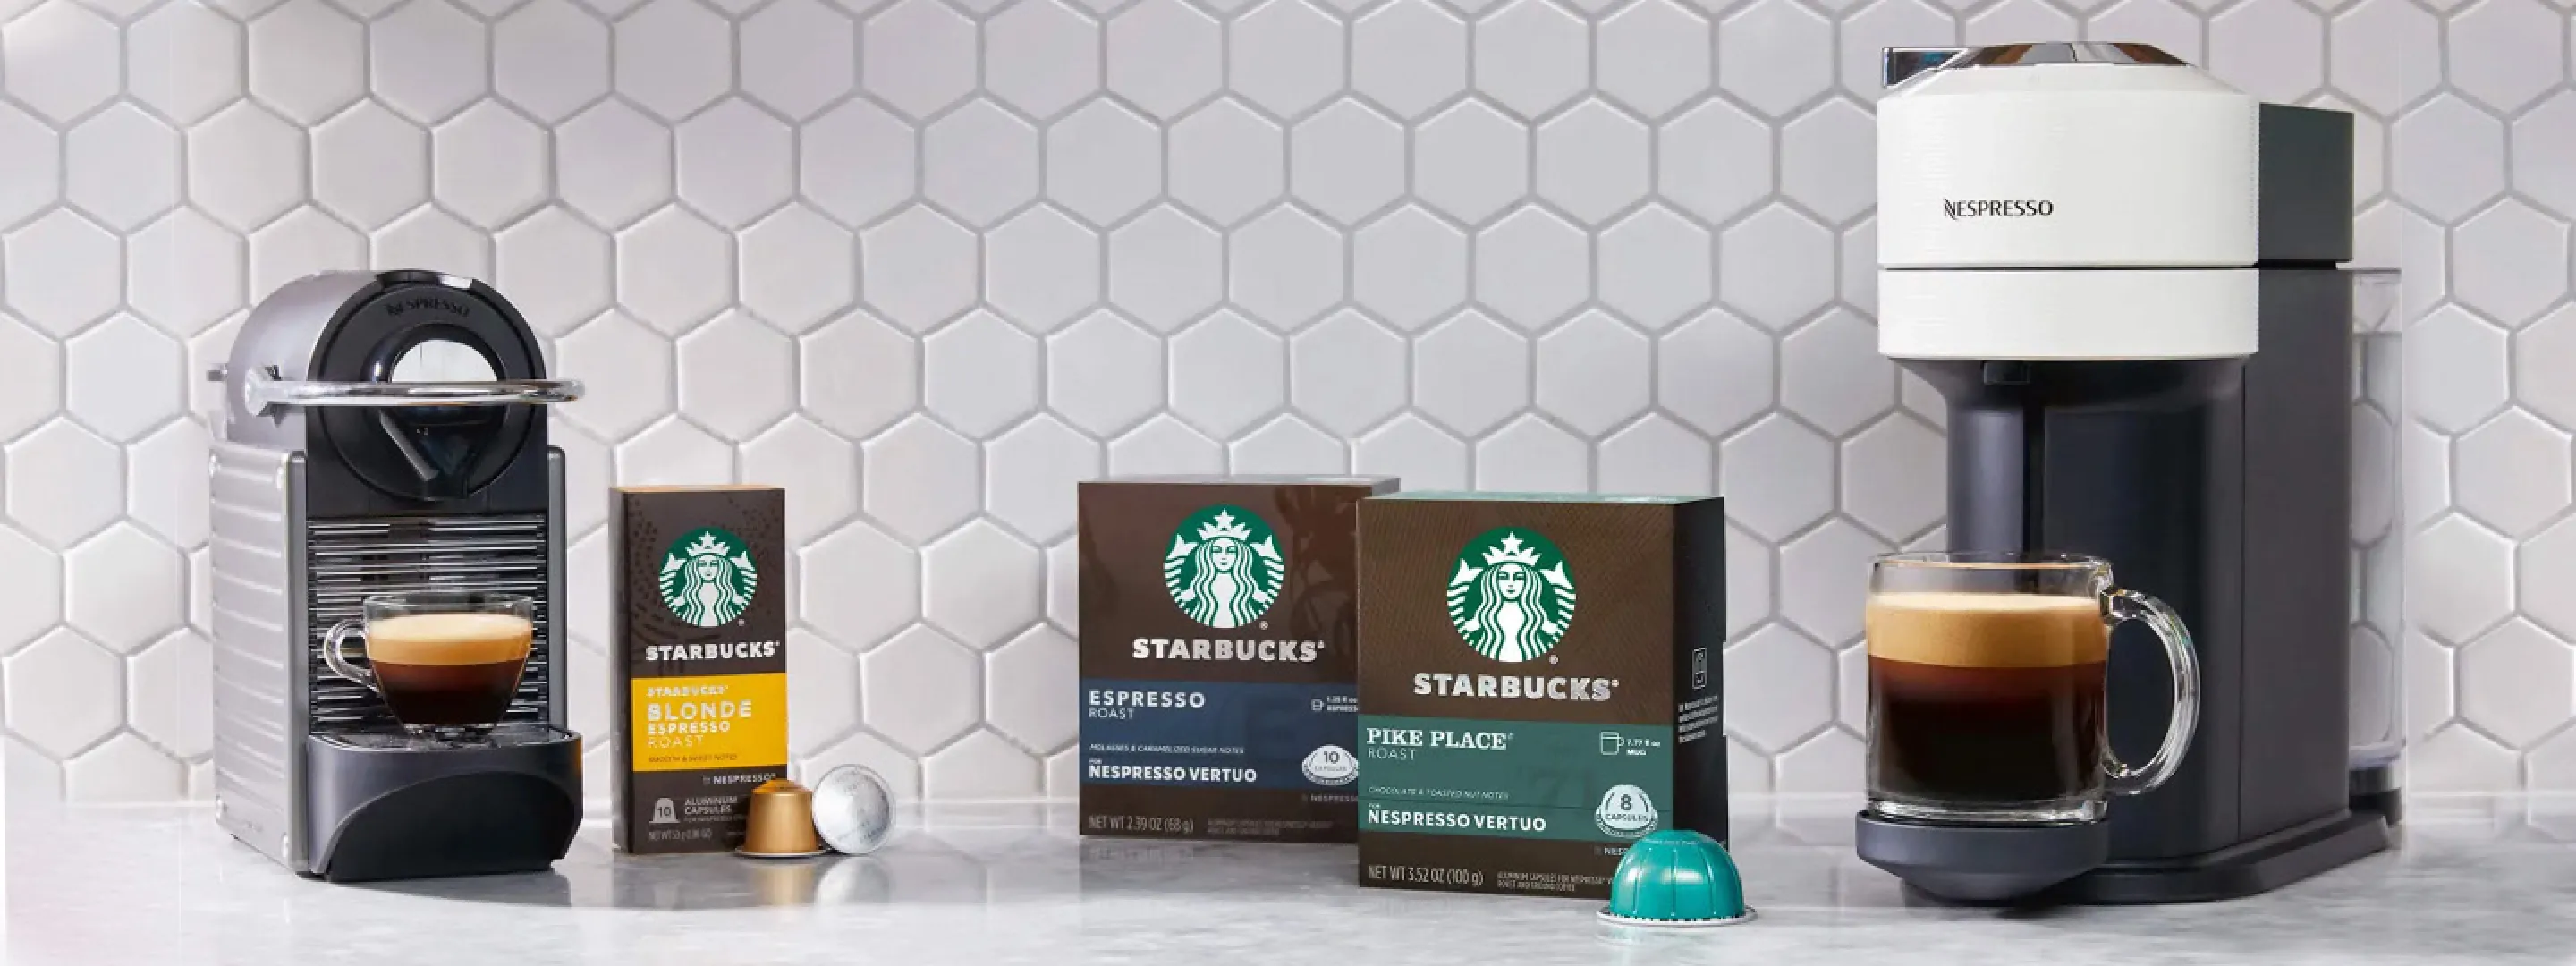 Starbucks By Nespresso Vertuo Line Pods - Light Roast Coffee